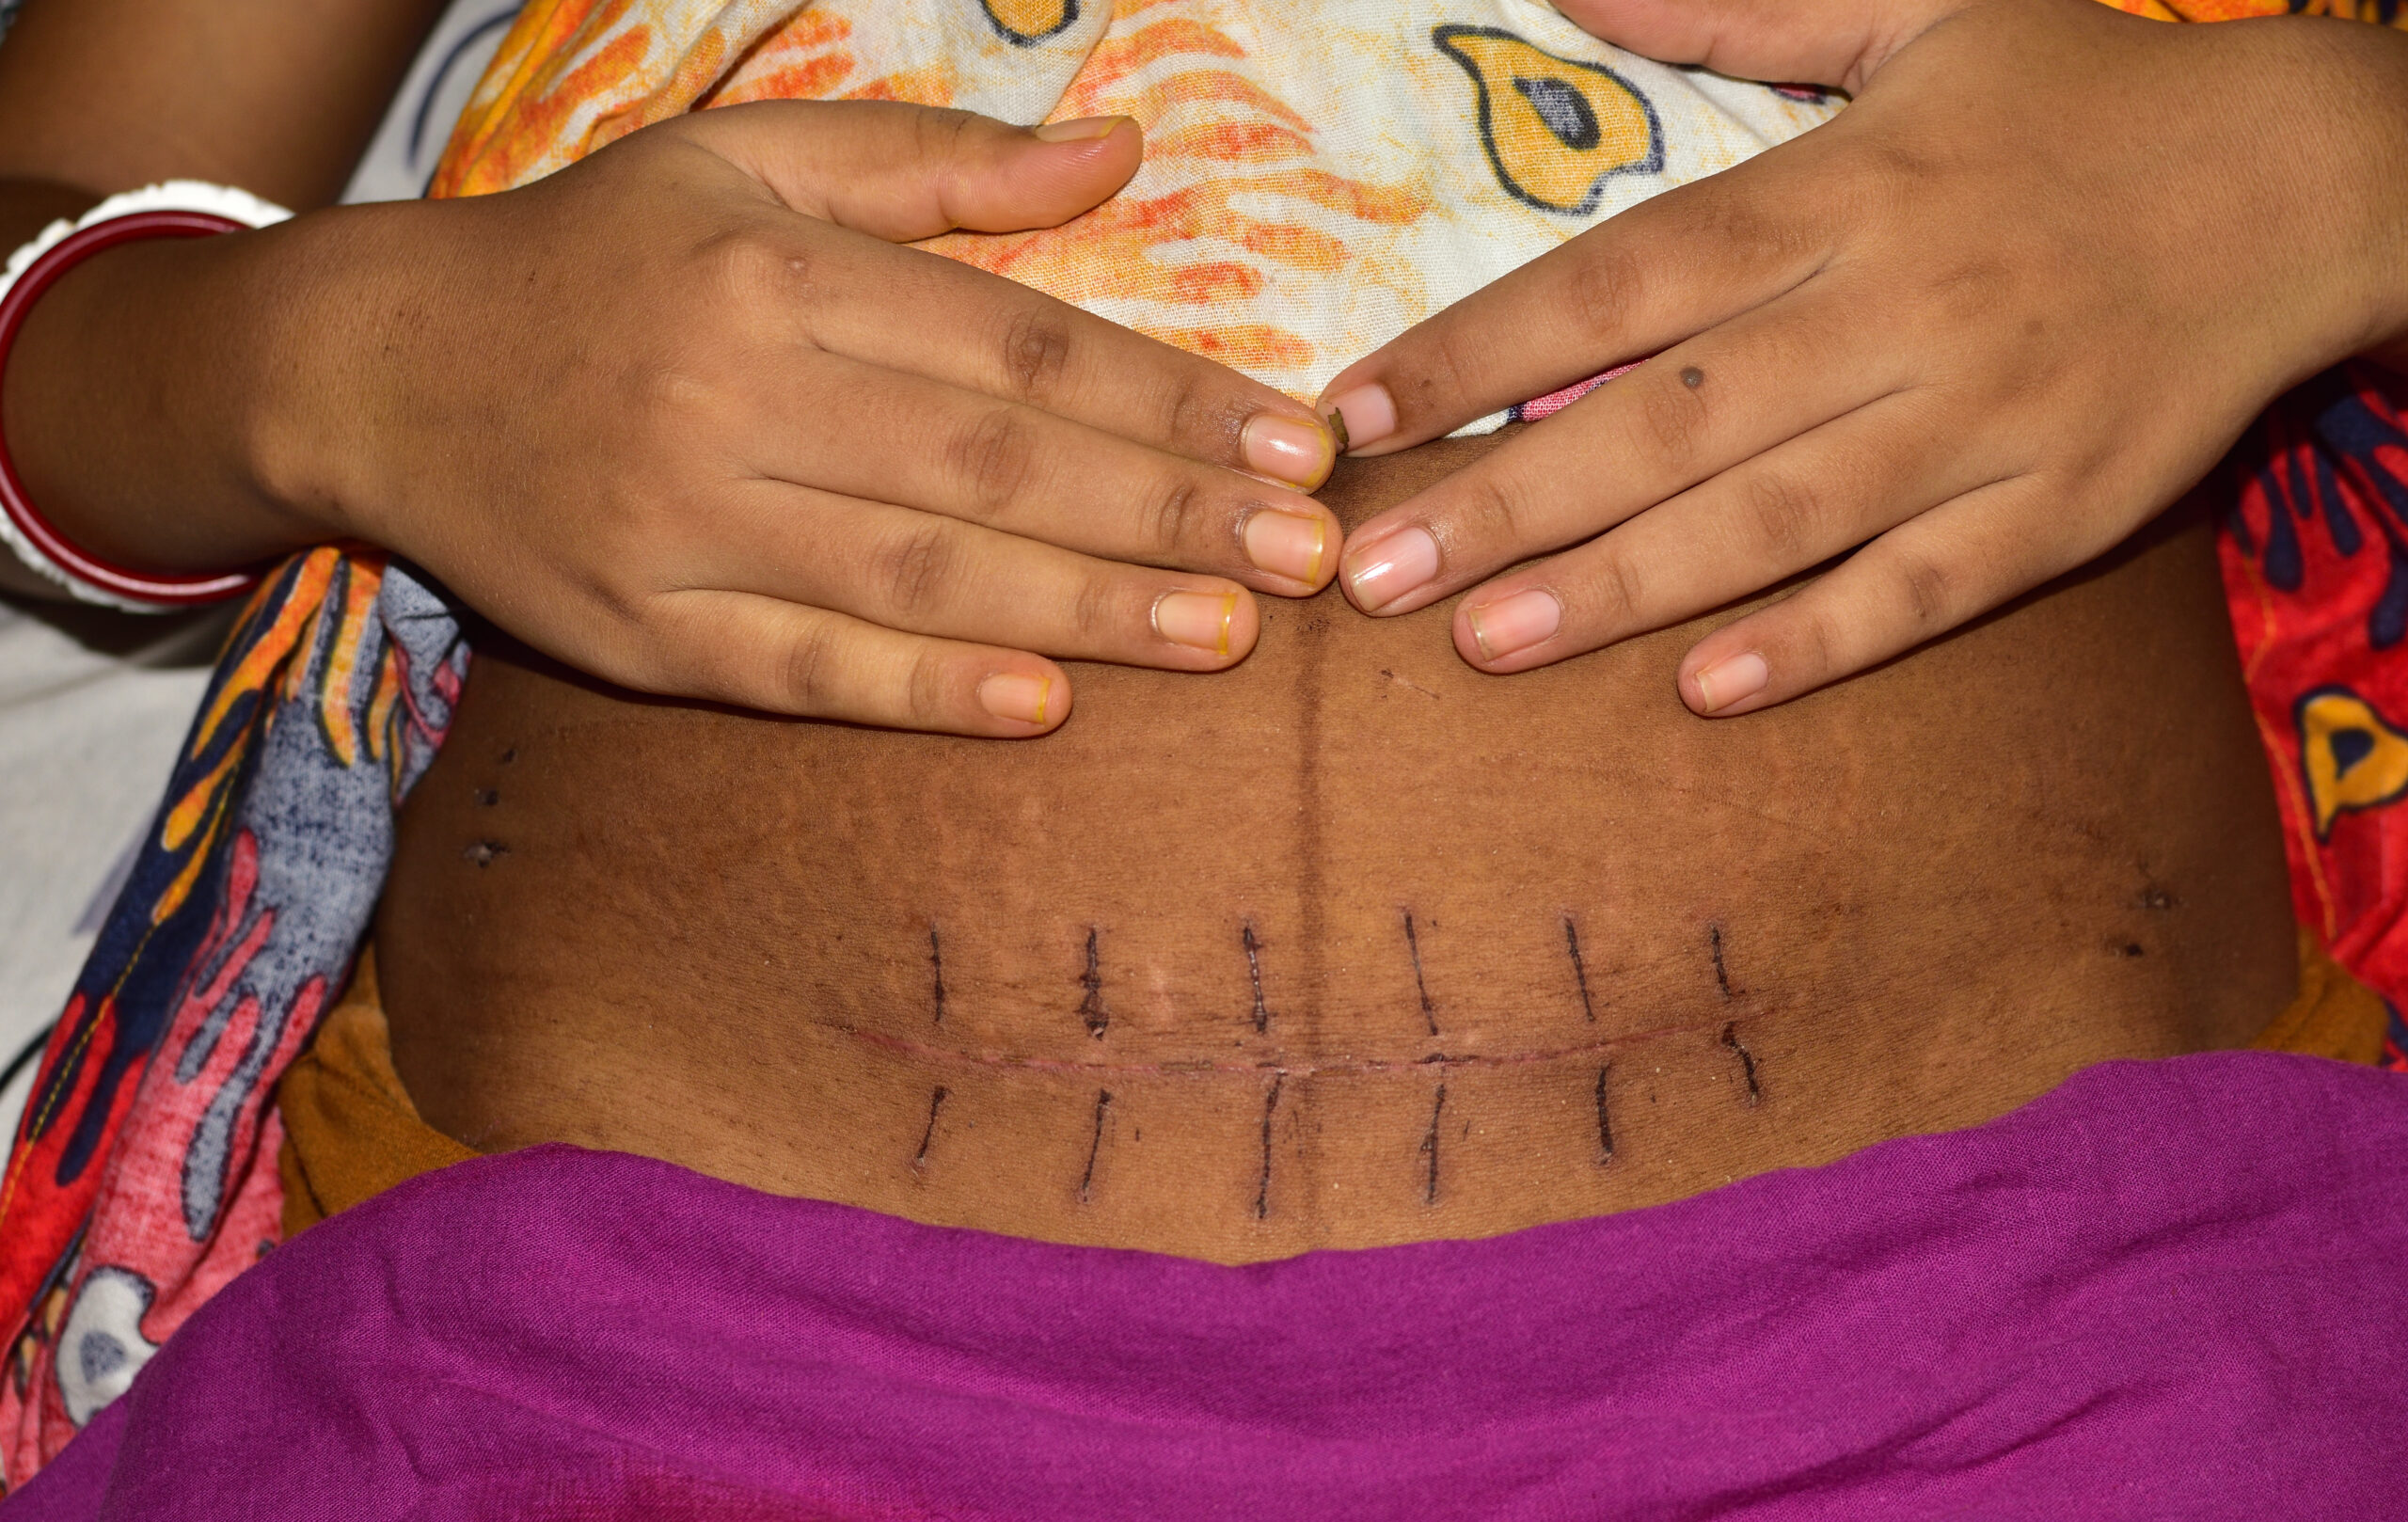 Caesarean Scars – Management of C-Section scars